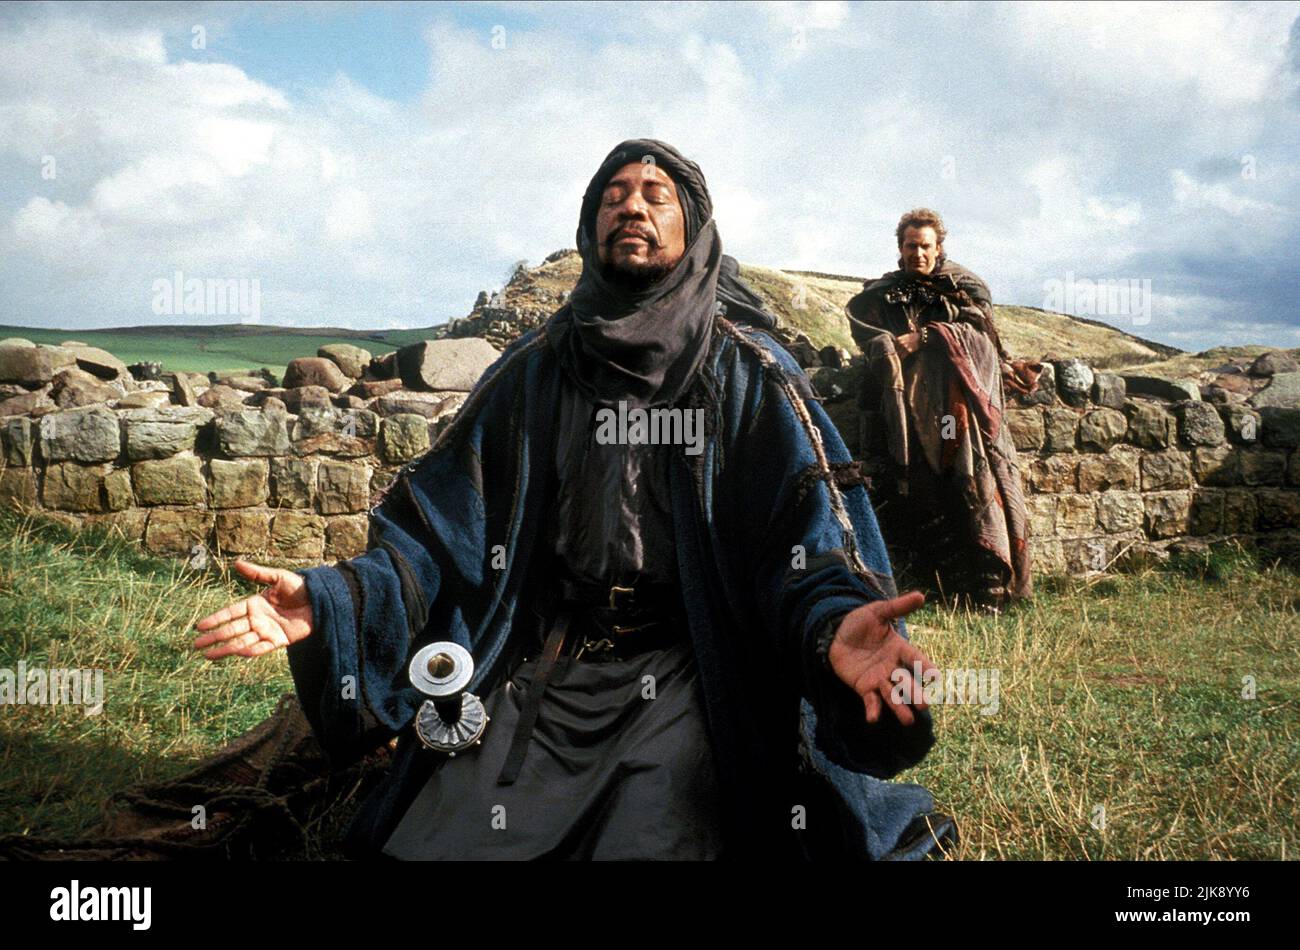 Morgan Freeman & Kevin Costner film: Robin Hood: Prince of Thieves (USA  1991) personnages: Azeem, Robin Hood Directeur: Kevin Reynolds 14 juin 1991  **AVERTISSEMENT** cette photographie est à usage éditorial exclusif et